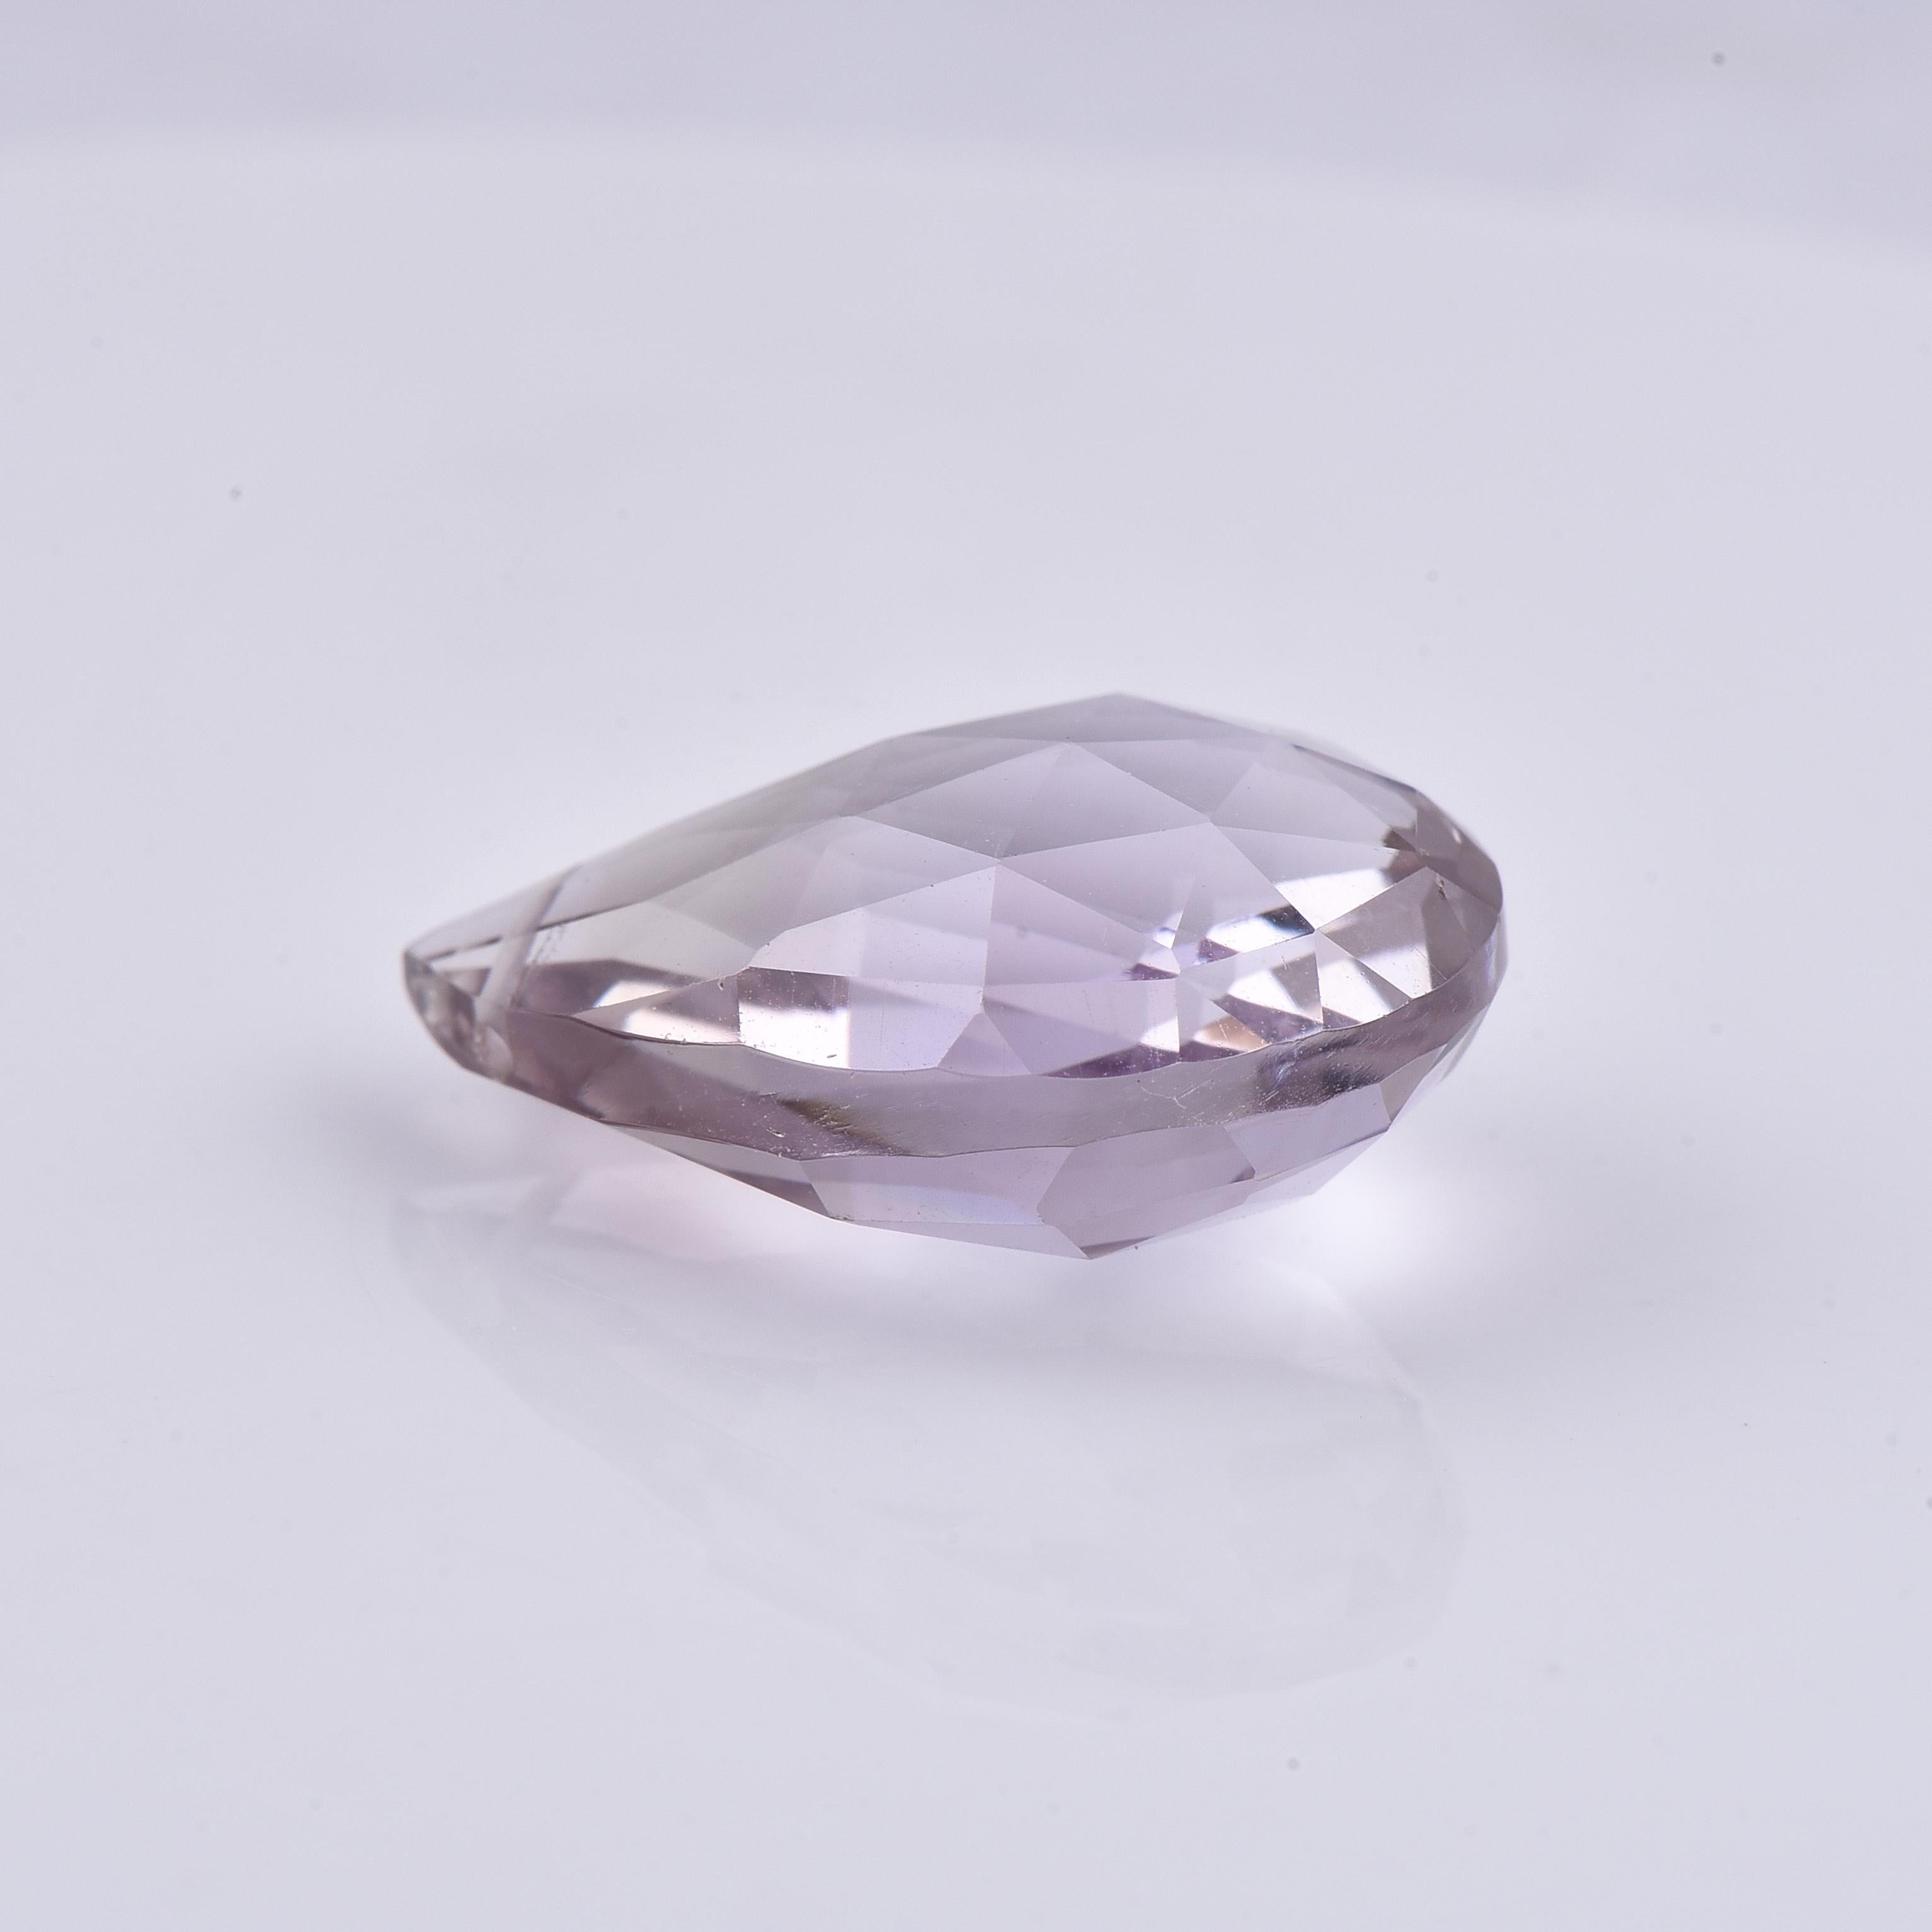 Stone Information: Natural Amethyst
Shape/Cut: Pear Shape
Color: Reddish Purple/Purple
Dimensions (mm): 19.72 x 13.31 x 8.81
Weight: 13.20ct